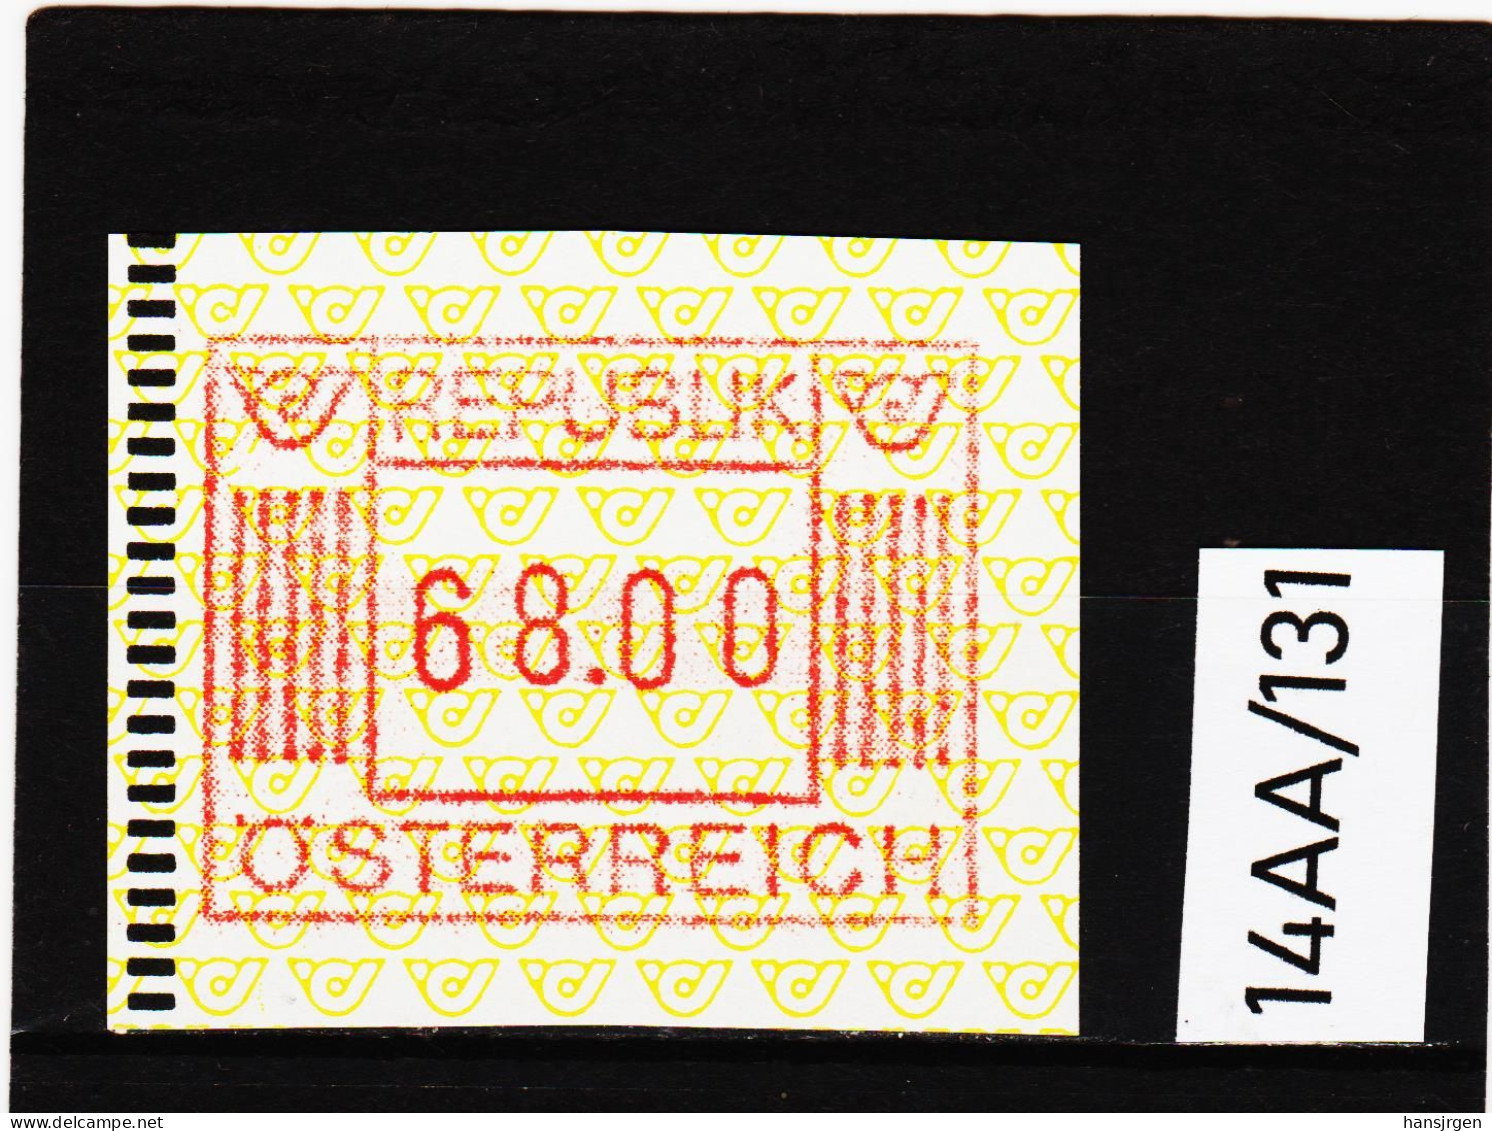 14AA/131  ÖSTERREICH 1983 AUTOMATENMARKEN  A N K  1. AUSGABE  68,00 SCHILLING   ** Postfrisch - Timbres De Distributeurs [ATM]